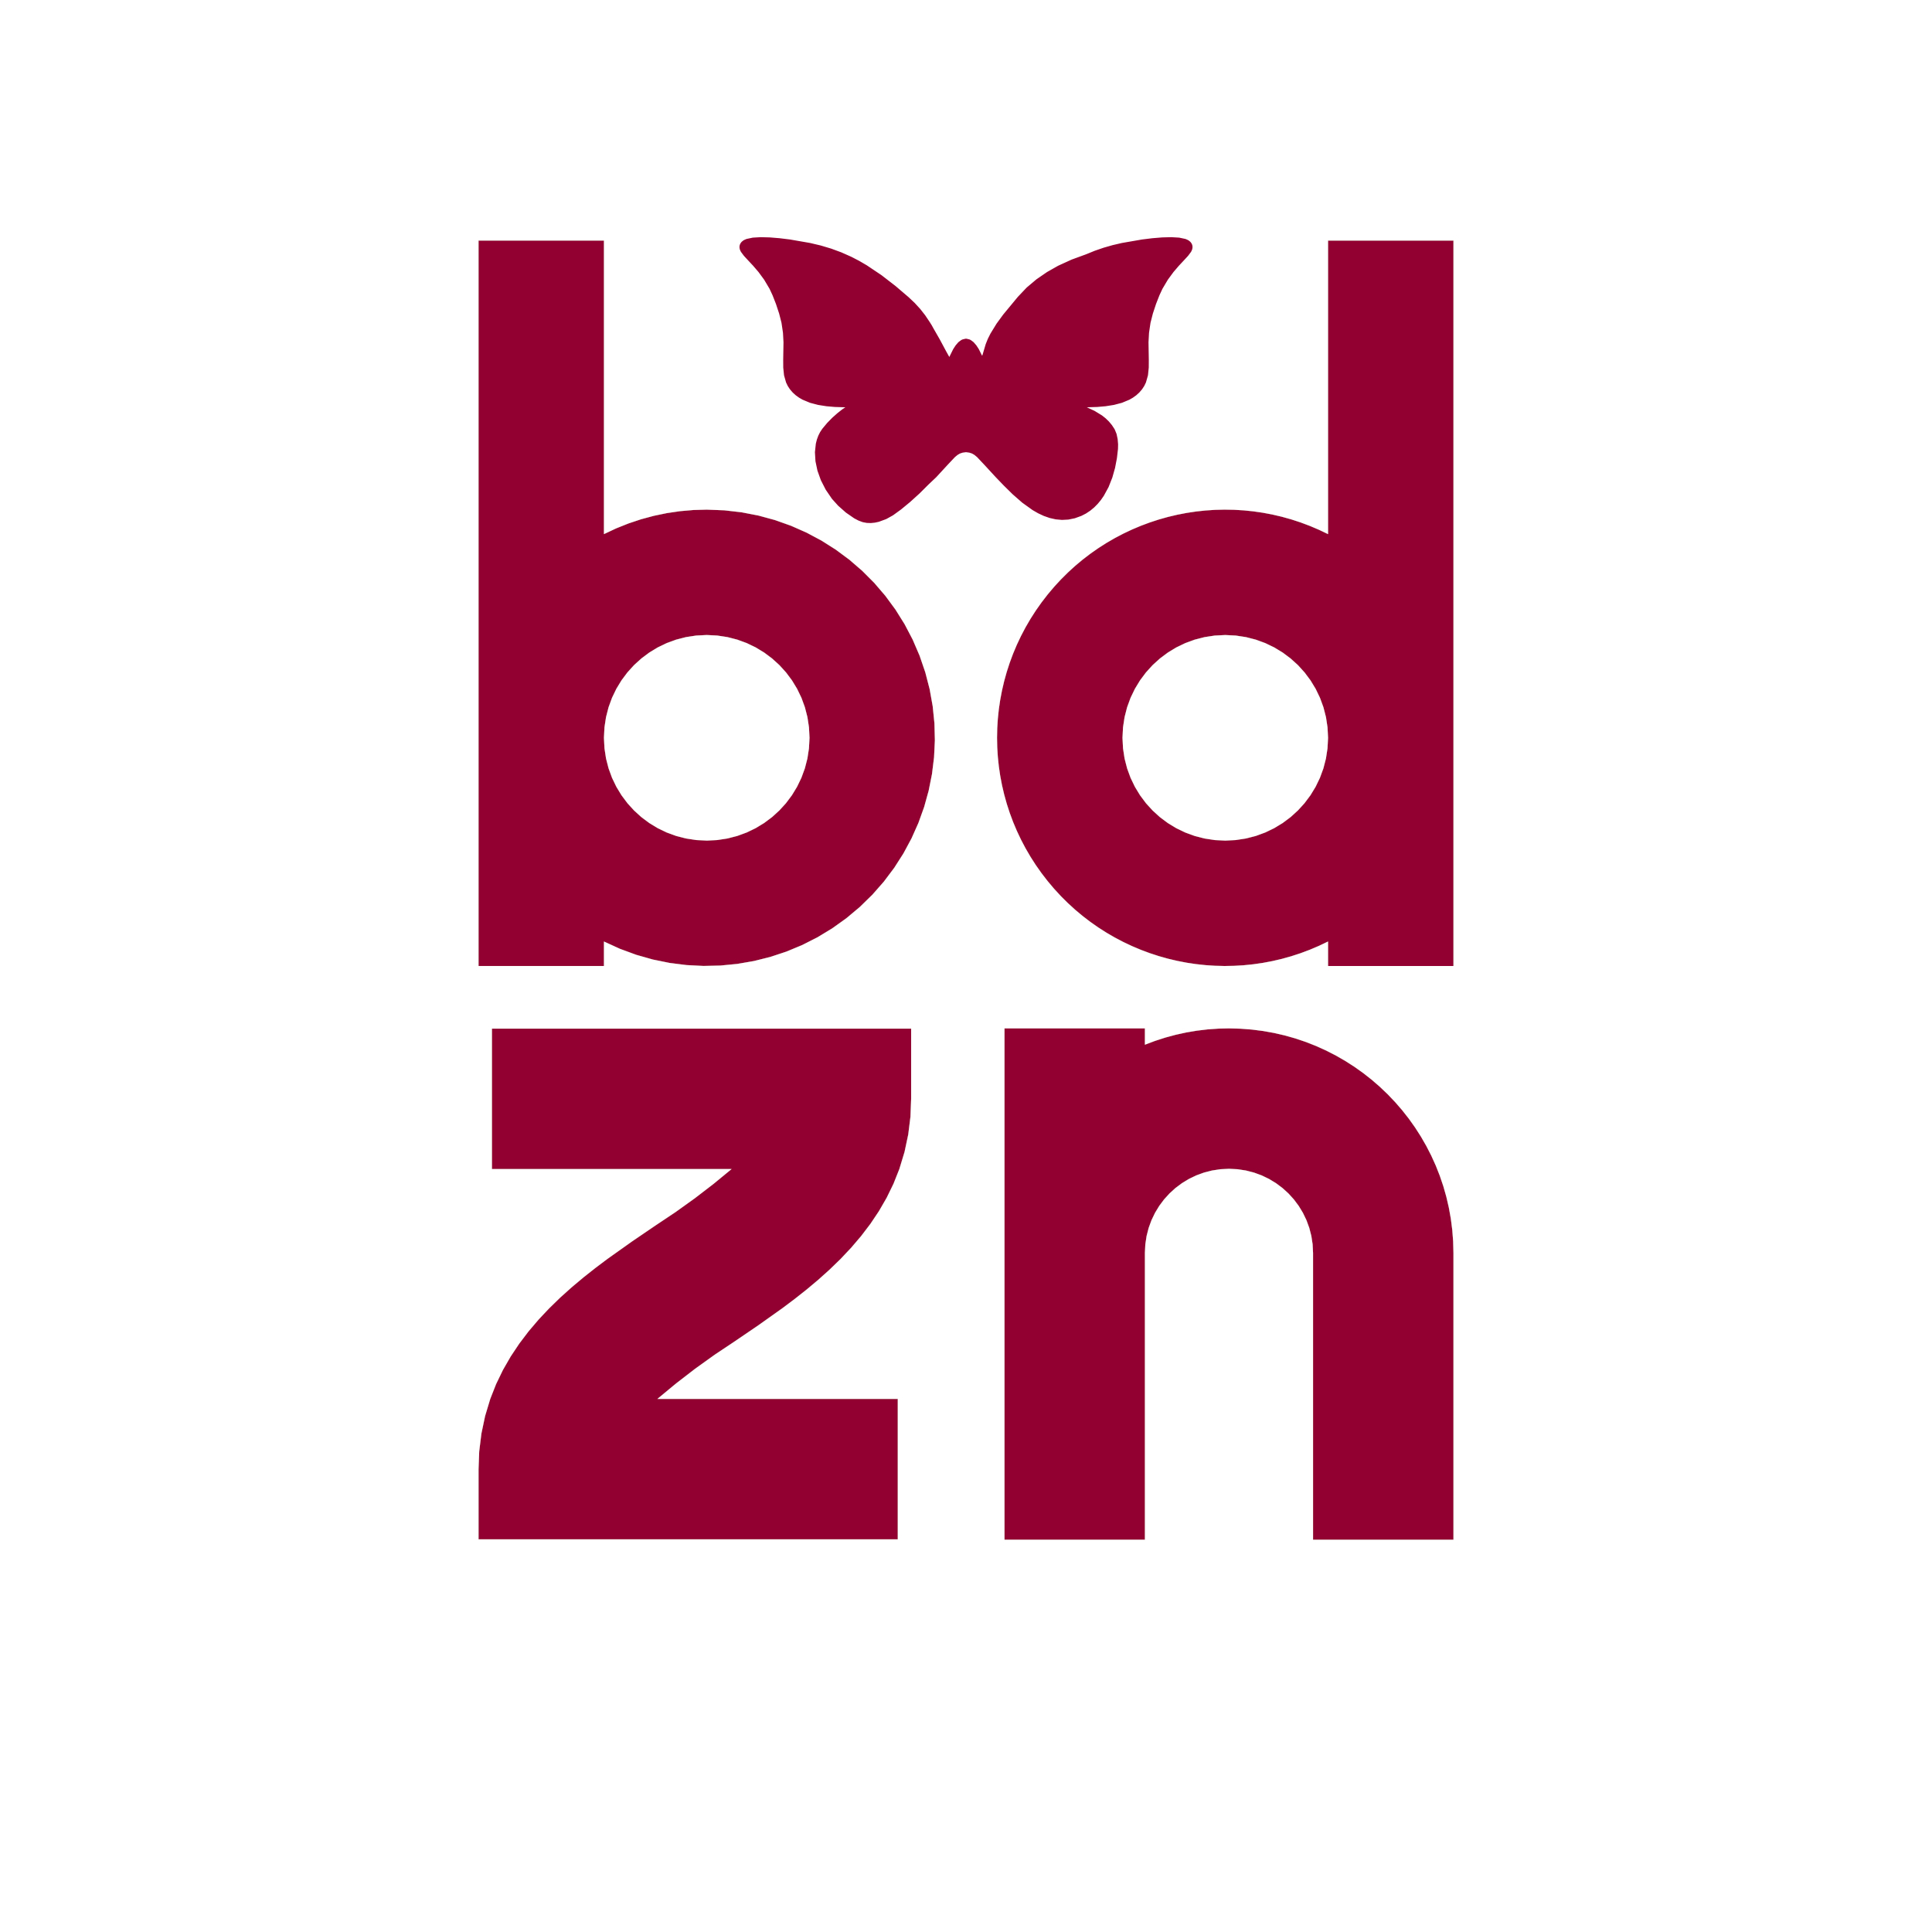 The Burgundy Zine logo